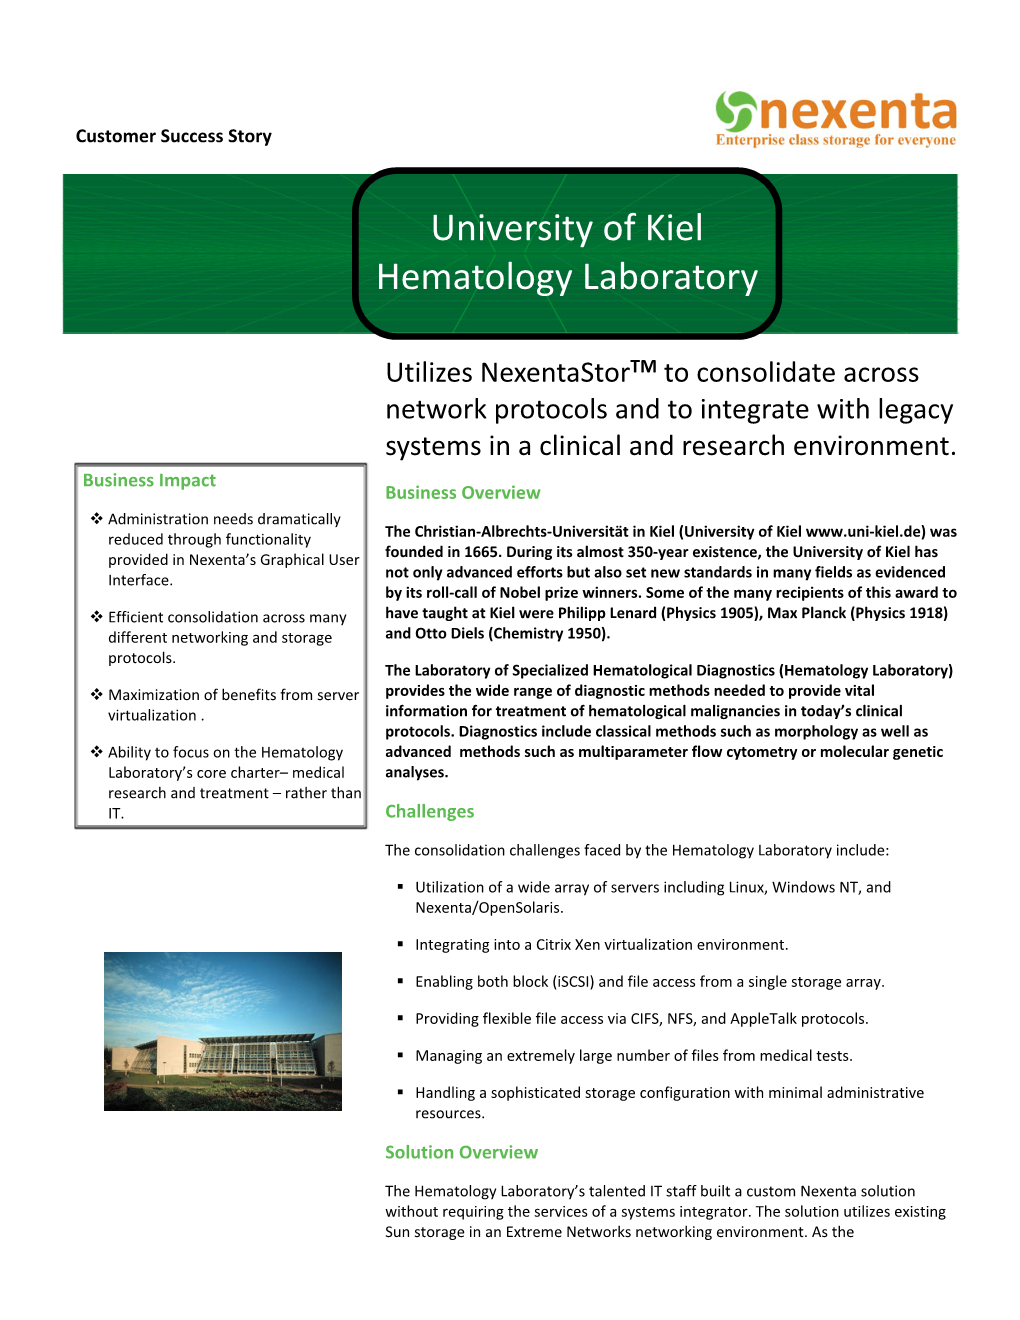 University of Kiel Hematology Laboratory